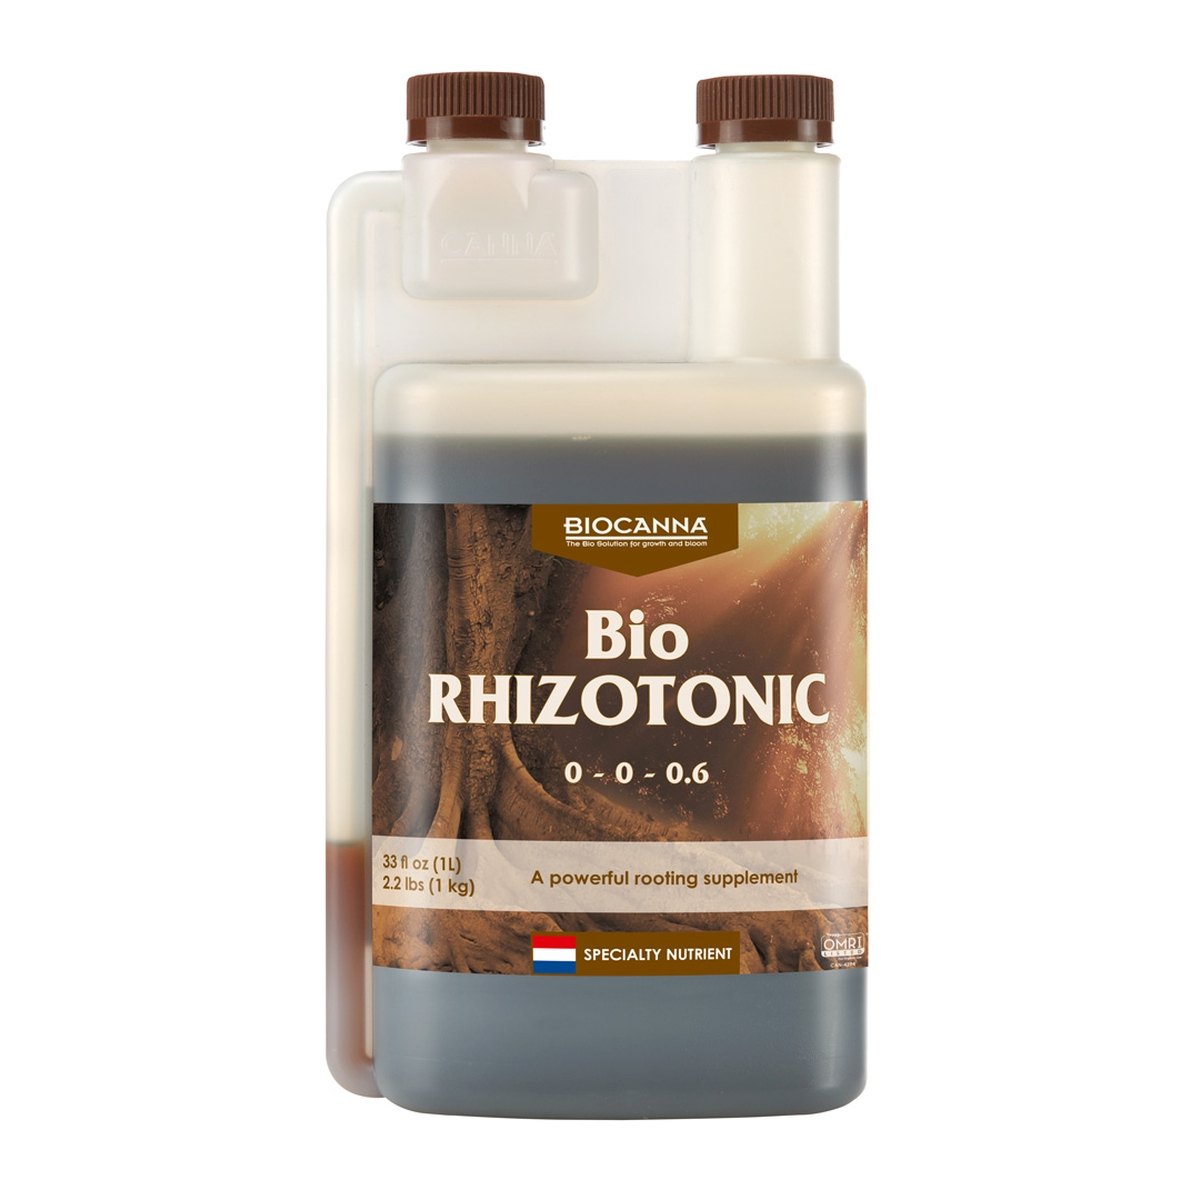 Canna Bio Rhizotonic - 1 liter